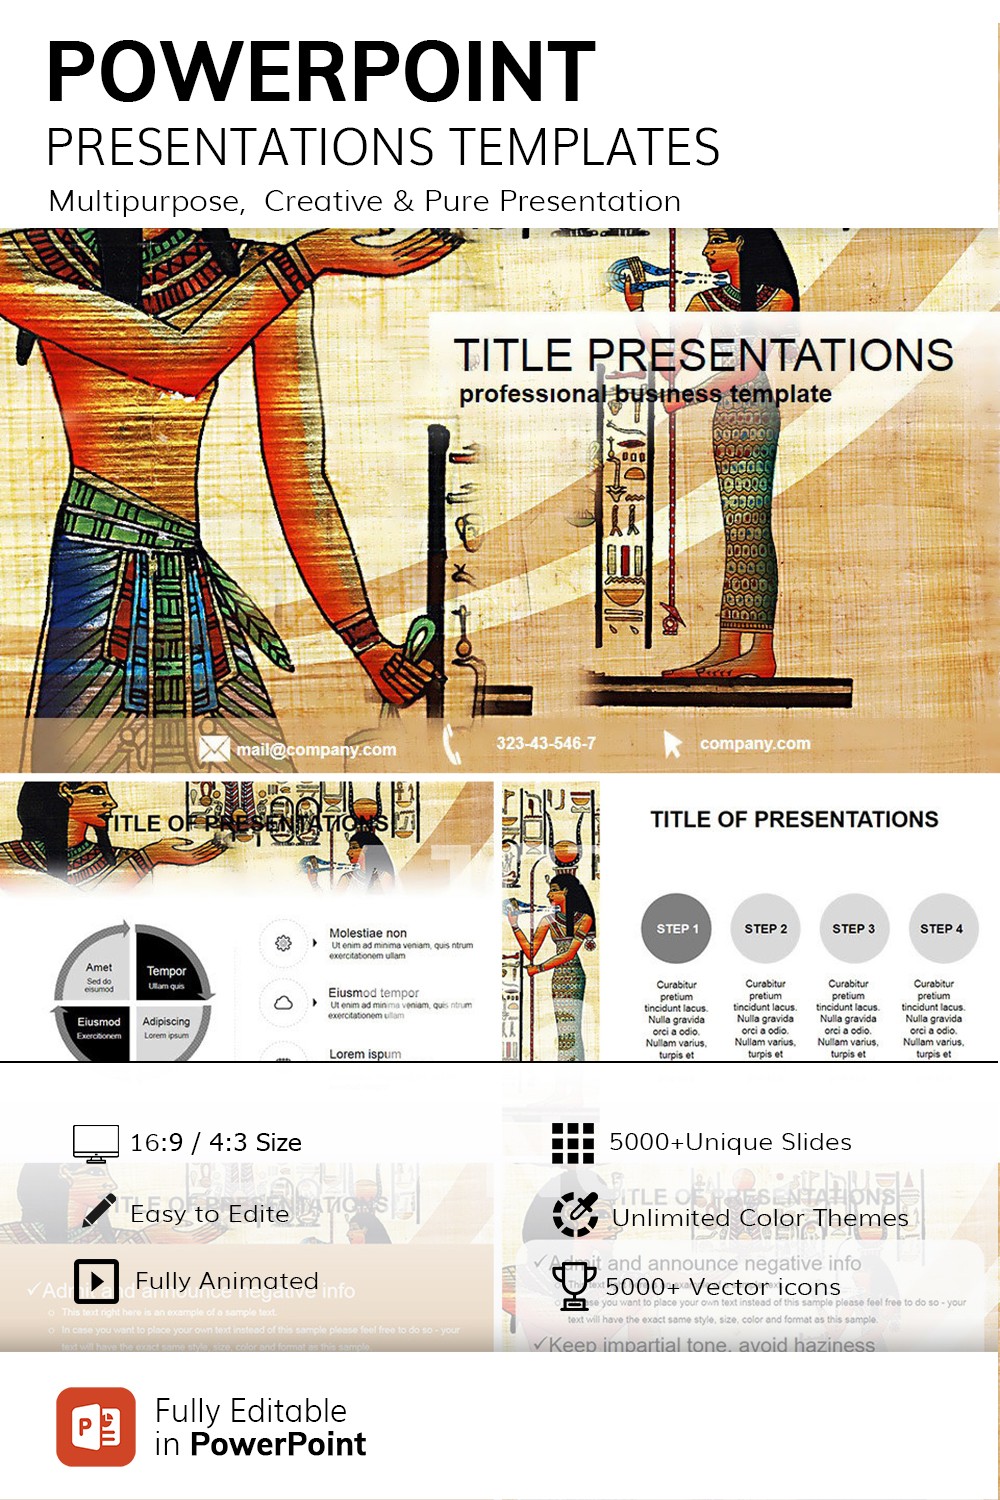 Egypt and Art PowerPoint templates | ImagineLayout.com